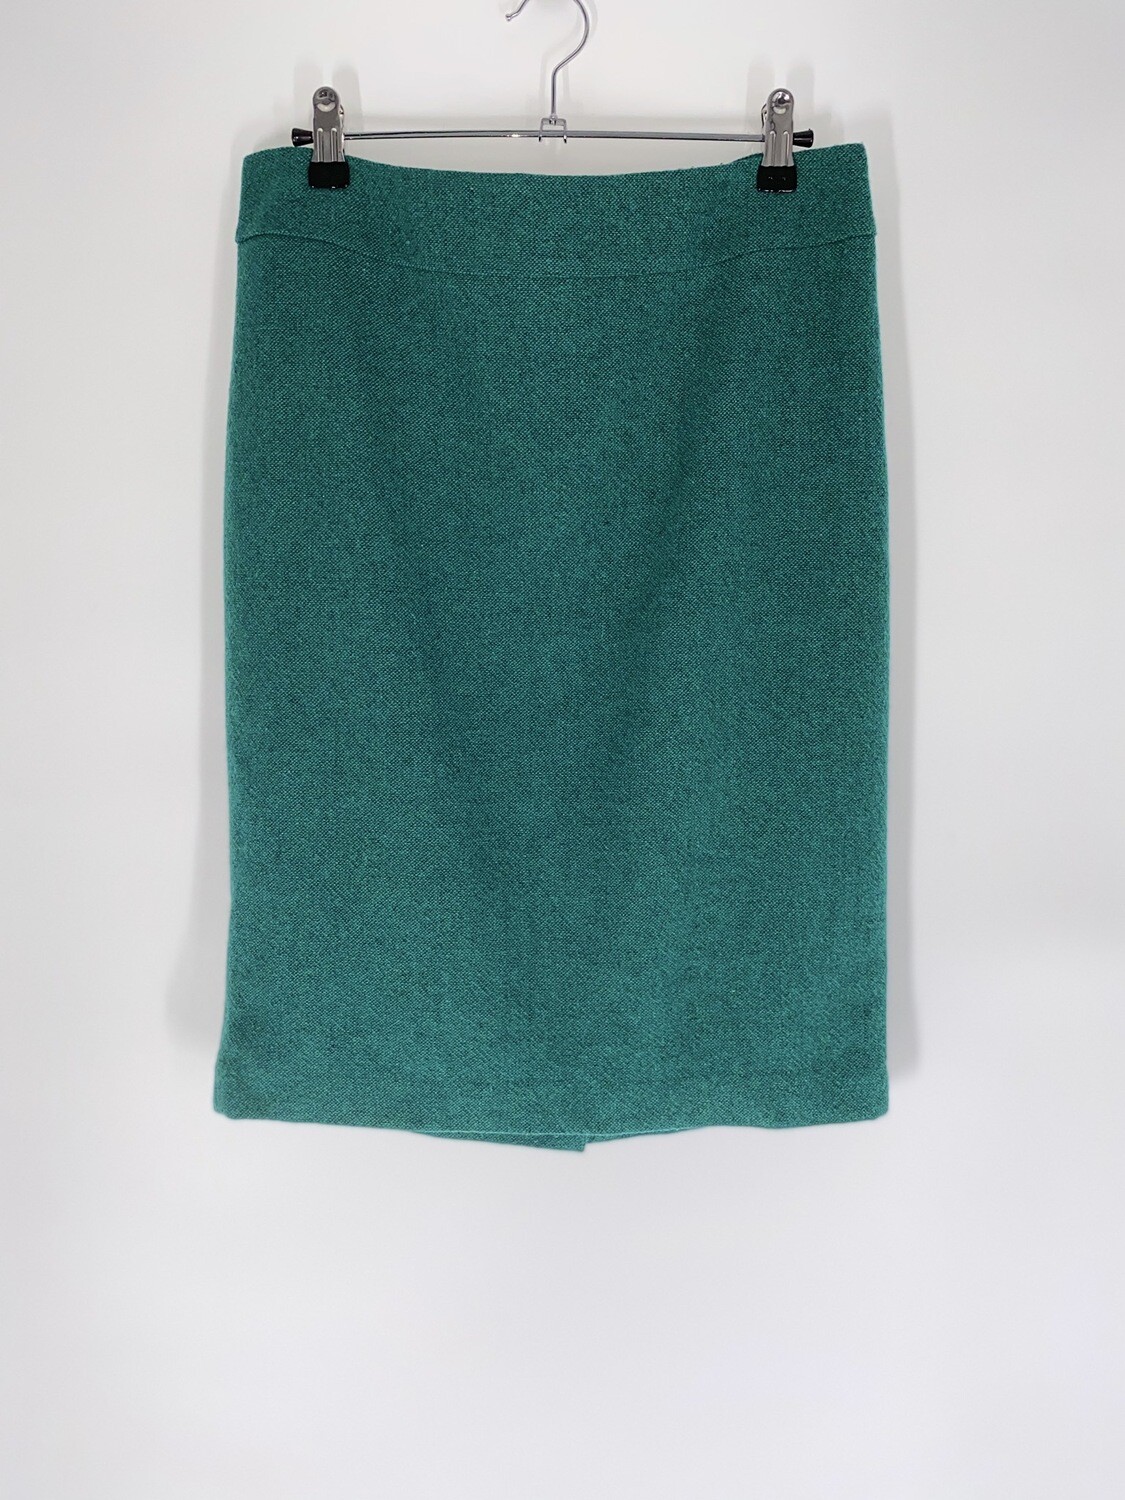 Green Pencil Skirt Size M